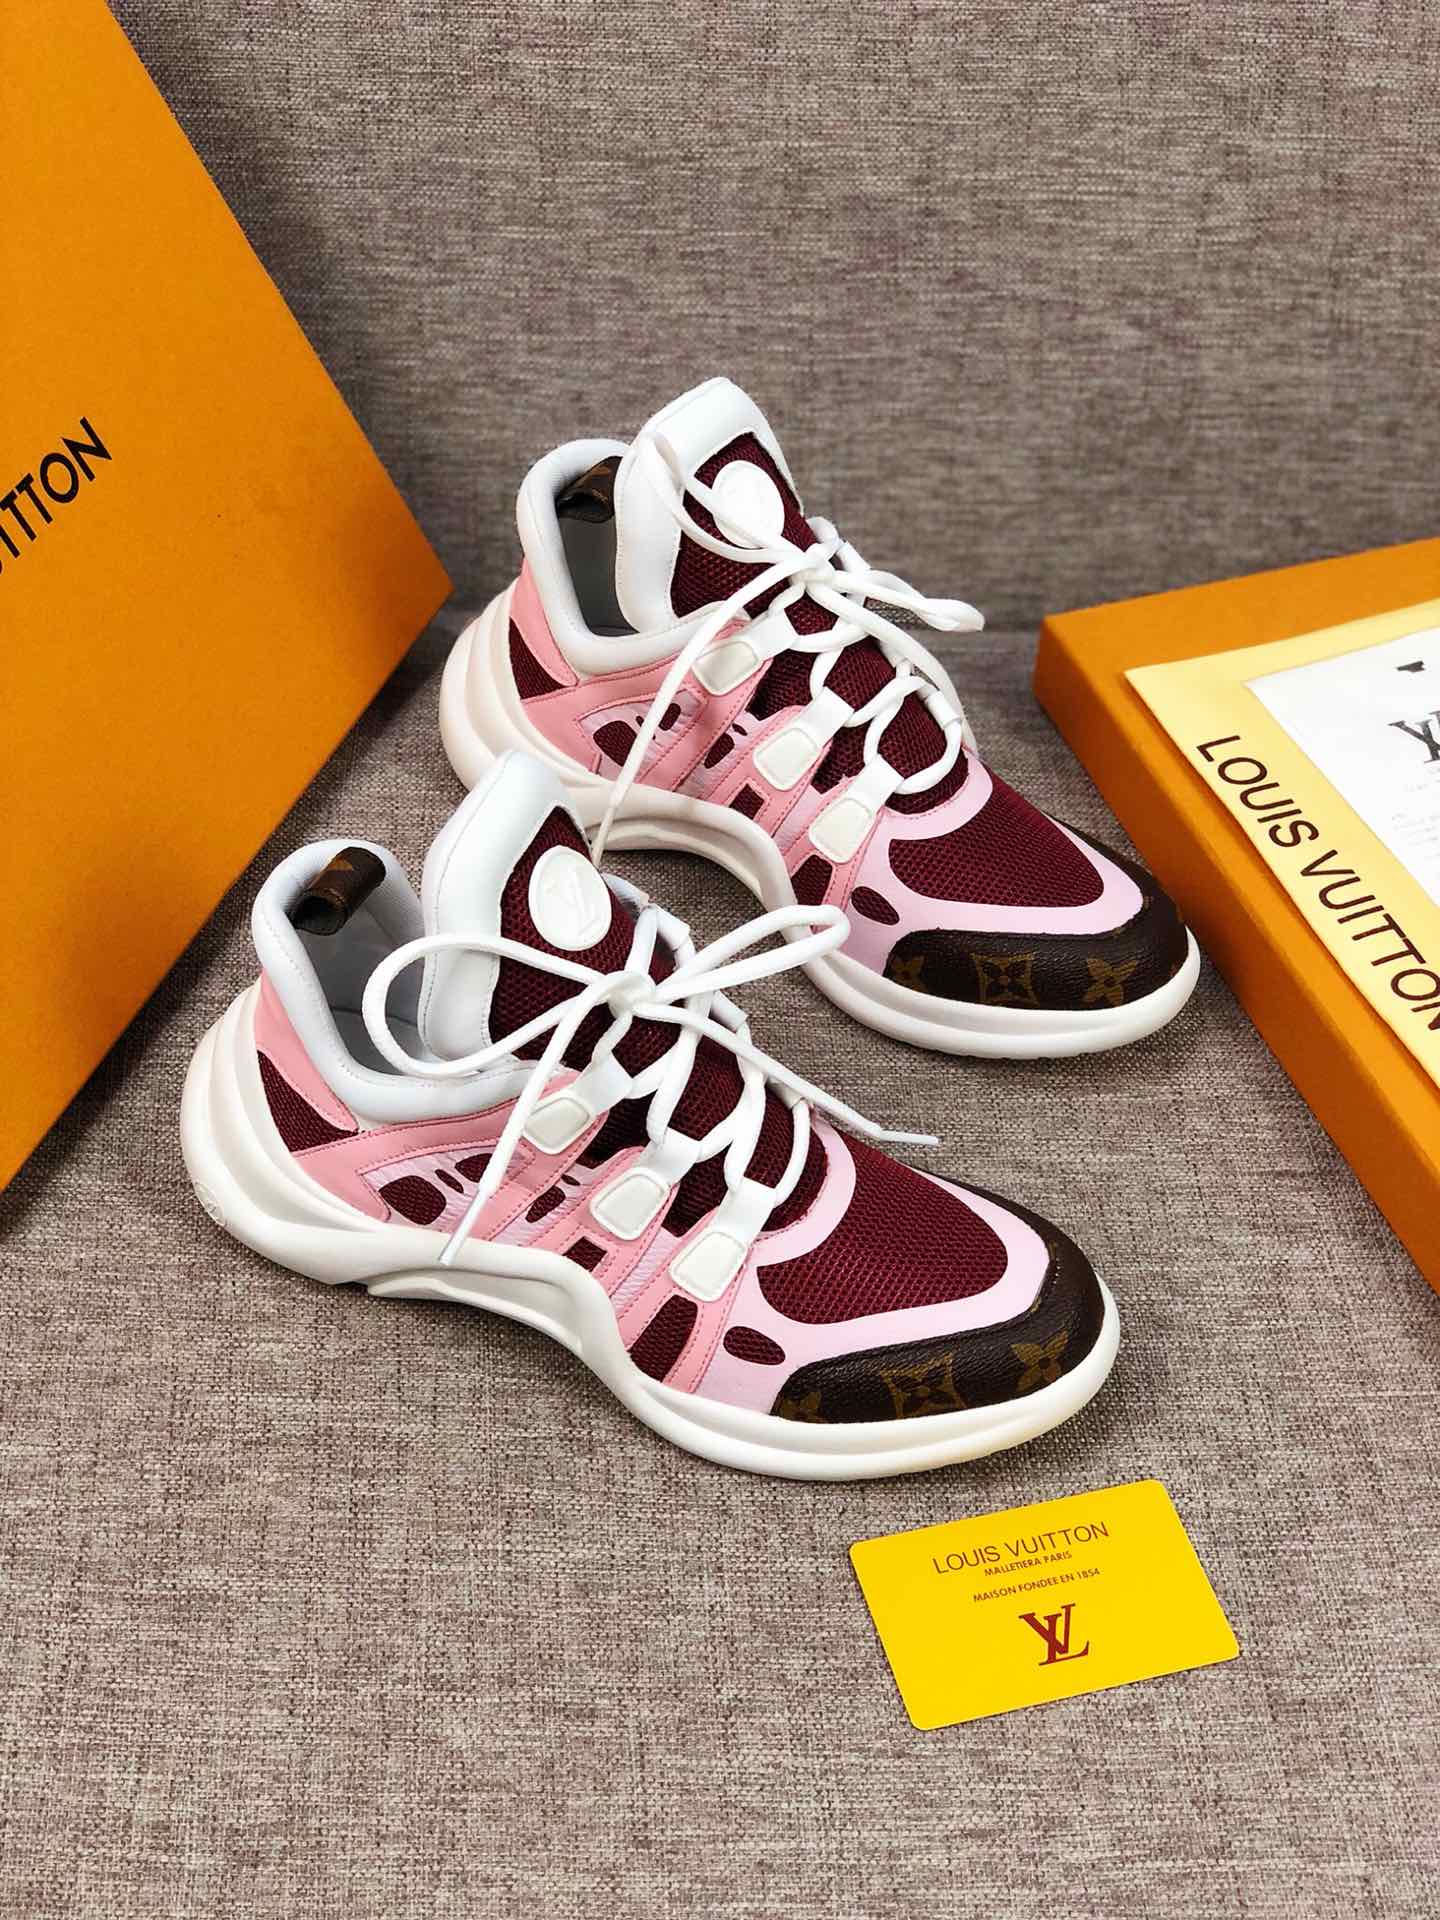 EI -LUV Archlight Pink Brown Sneaker